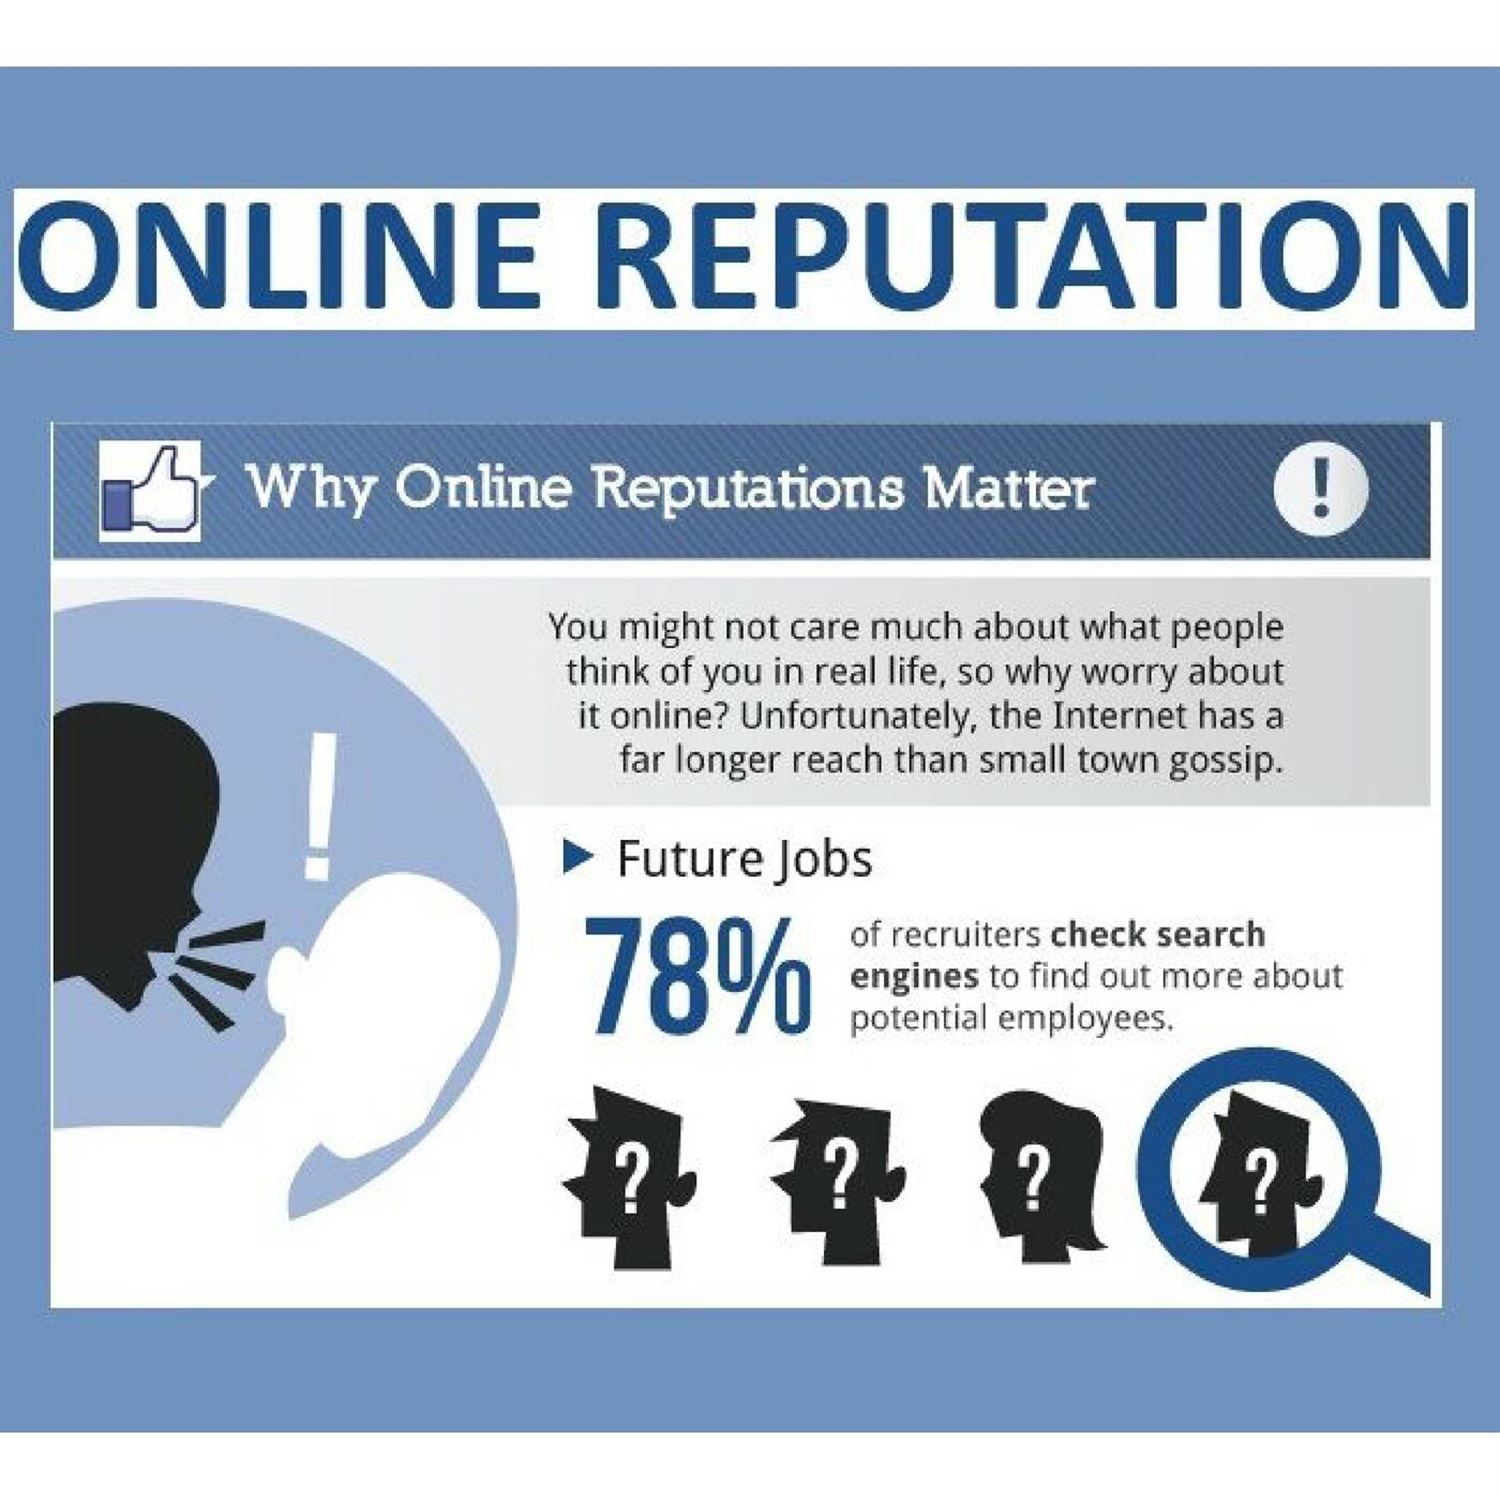 Real life vs online reputation